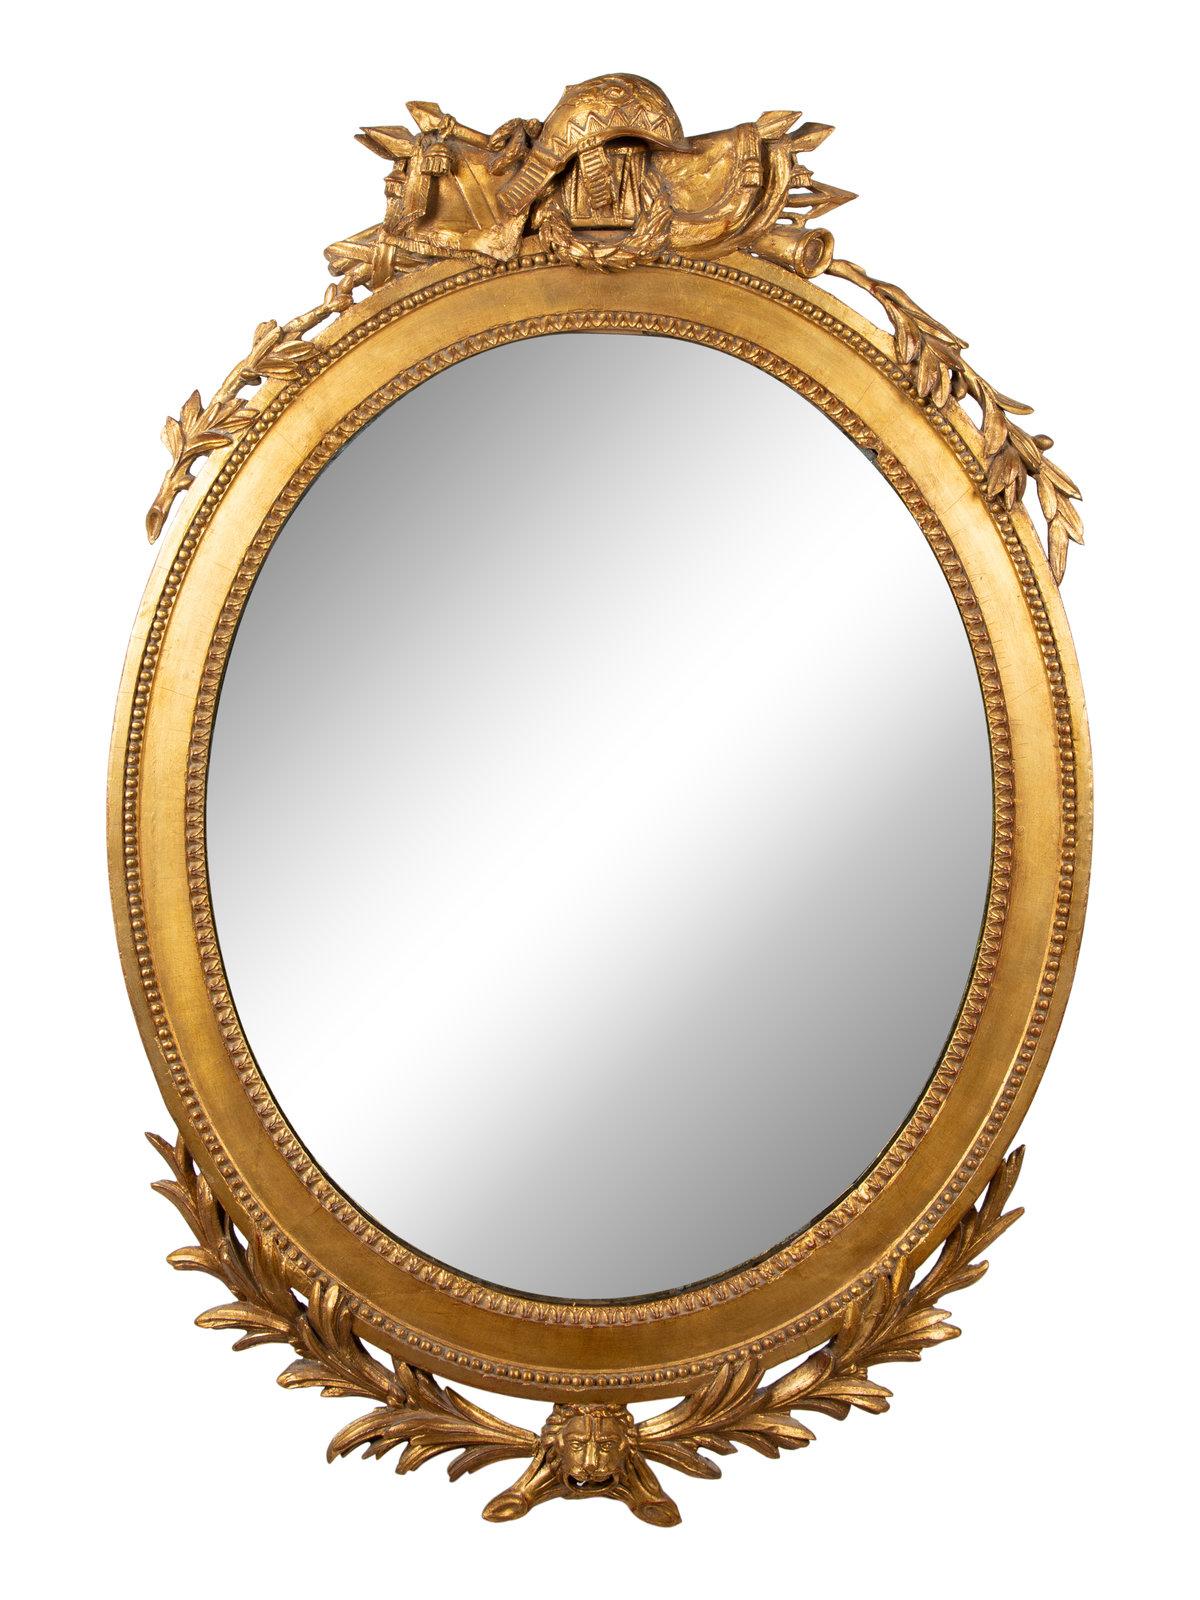 George III style giltwood mirror, 19th century. Measures:33.5